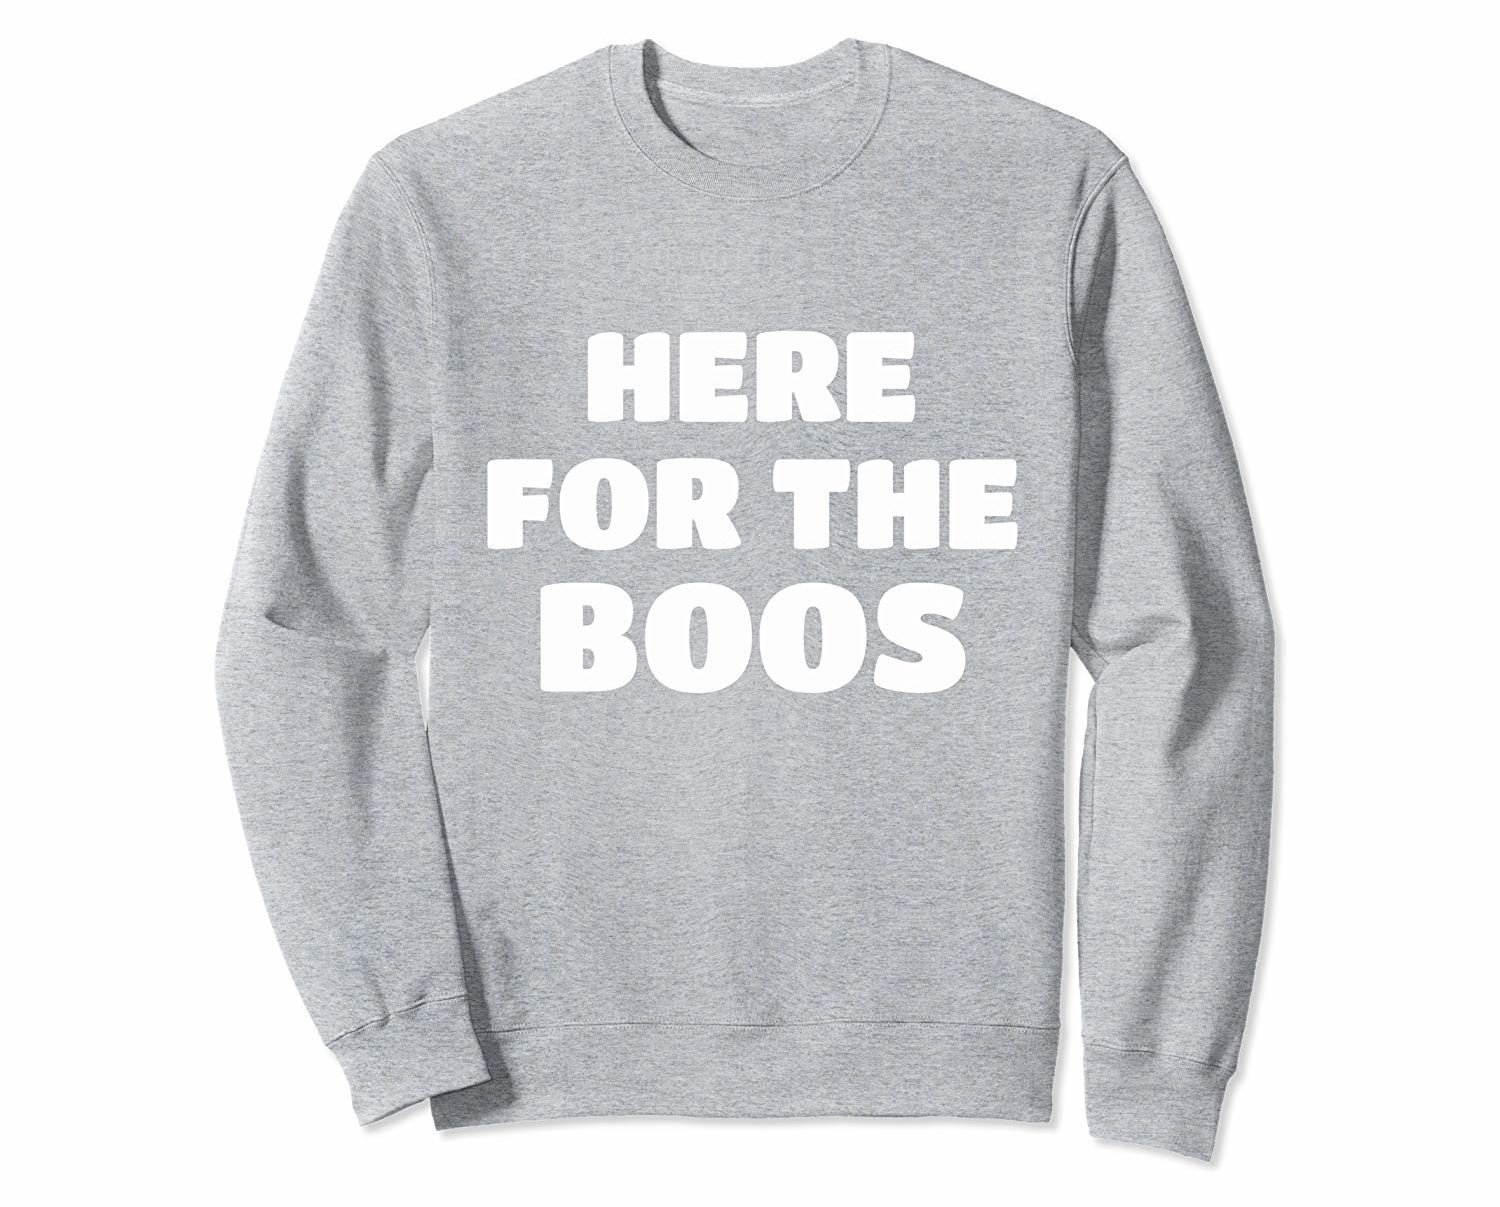 Funny Halloween Shirts 2023: Here For the Boos Sweatshirt 2023